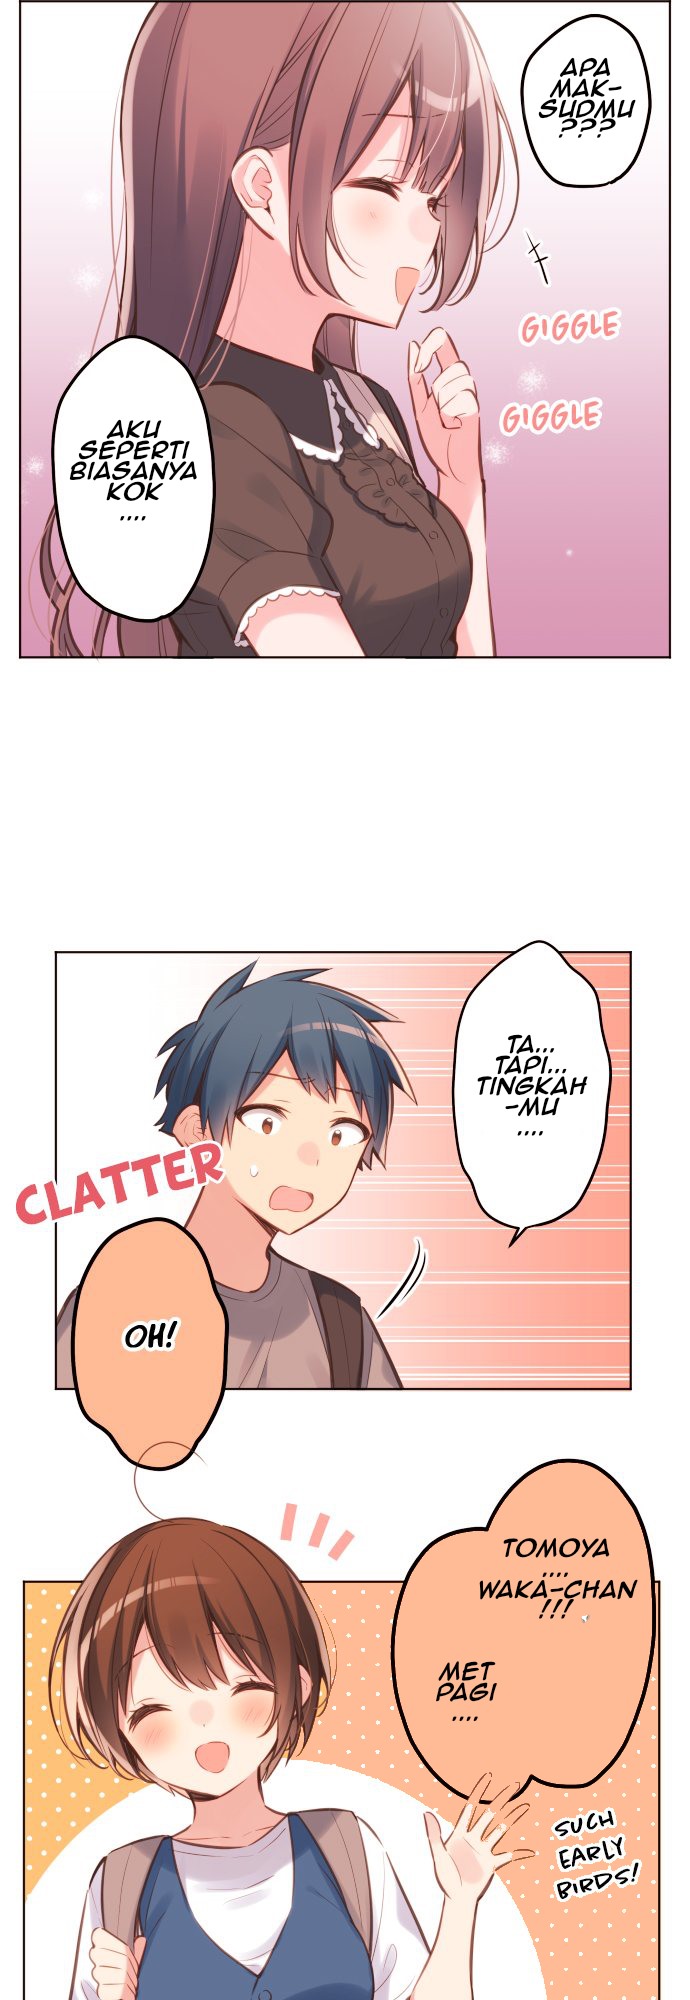 Waka-chan Is Flirty Again Chapter 31 16